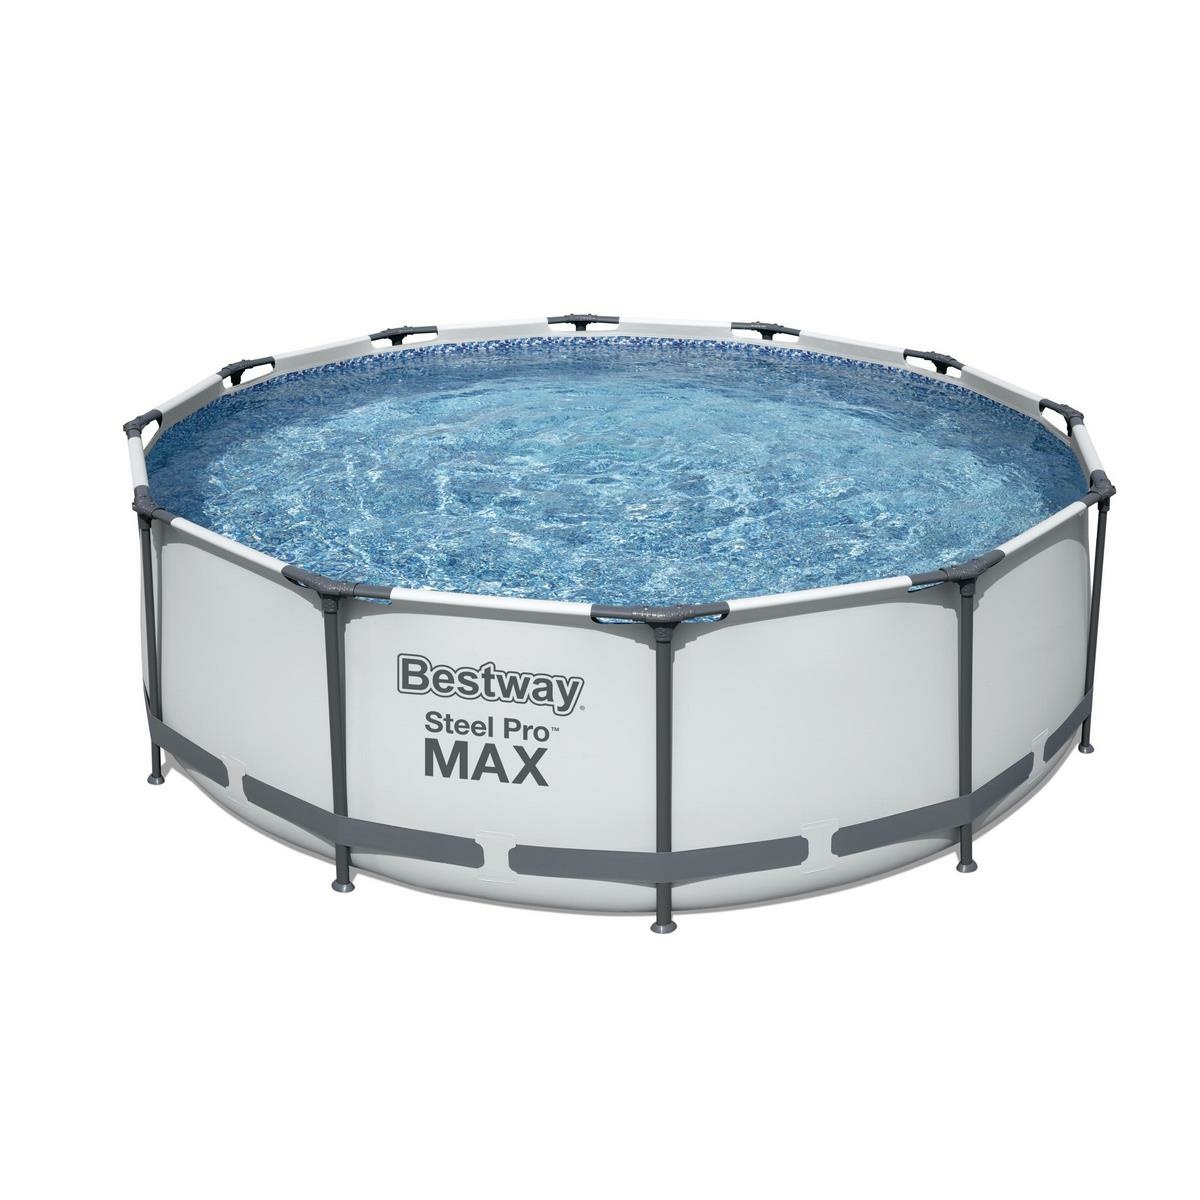 Bestway Steel Pro Max 366 x 100 cm 56418 nadzemný bazén